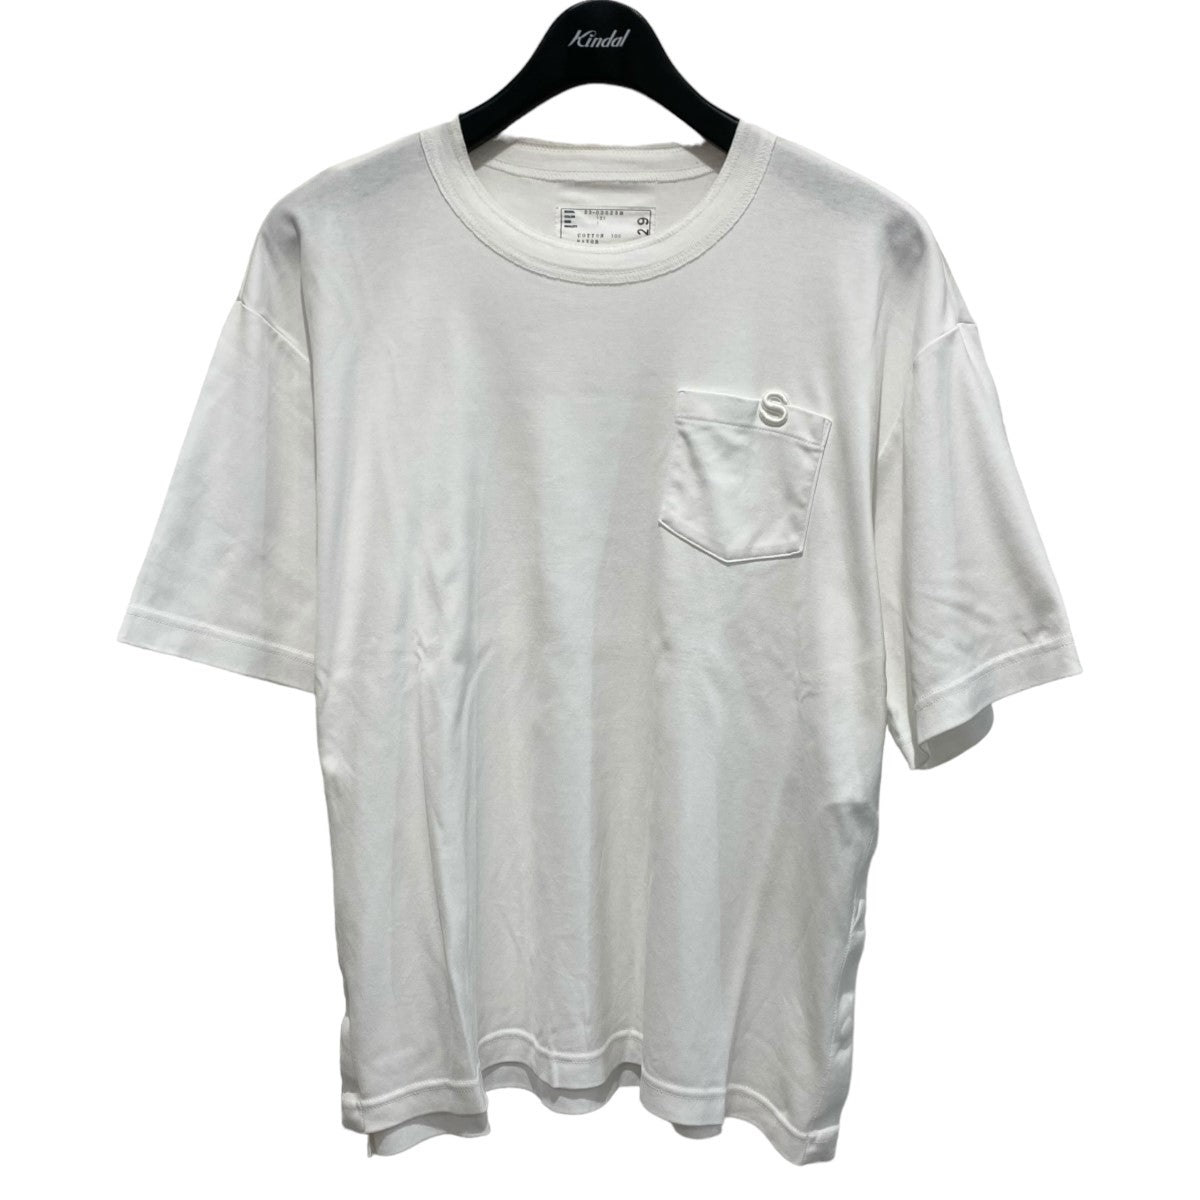 sacai(サカイ) S Cotton Jersey T-Shirt 23-03029M ホワイト サイズ 13 